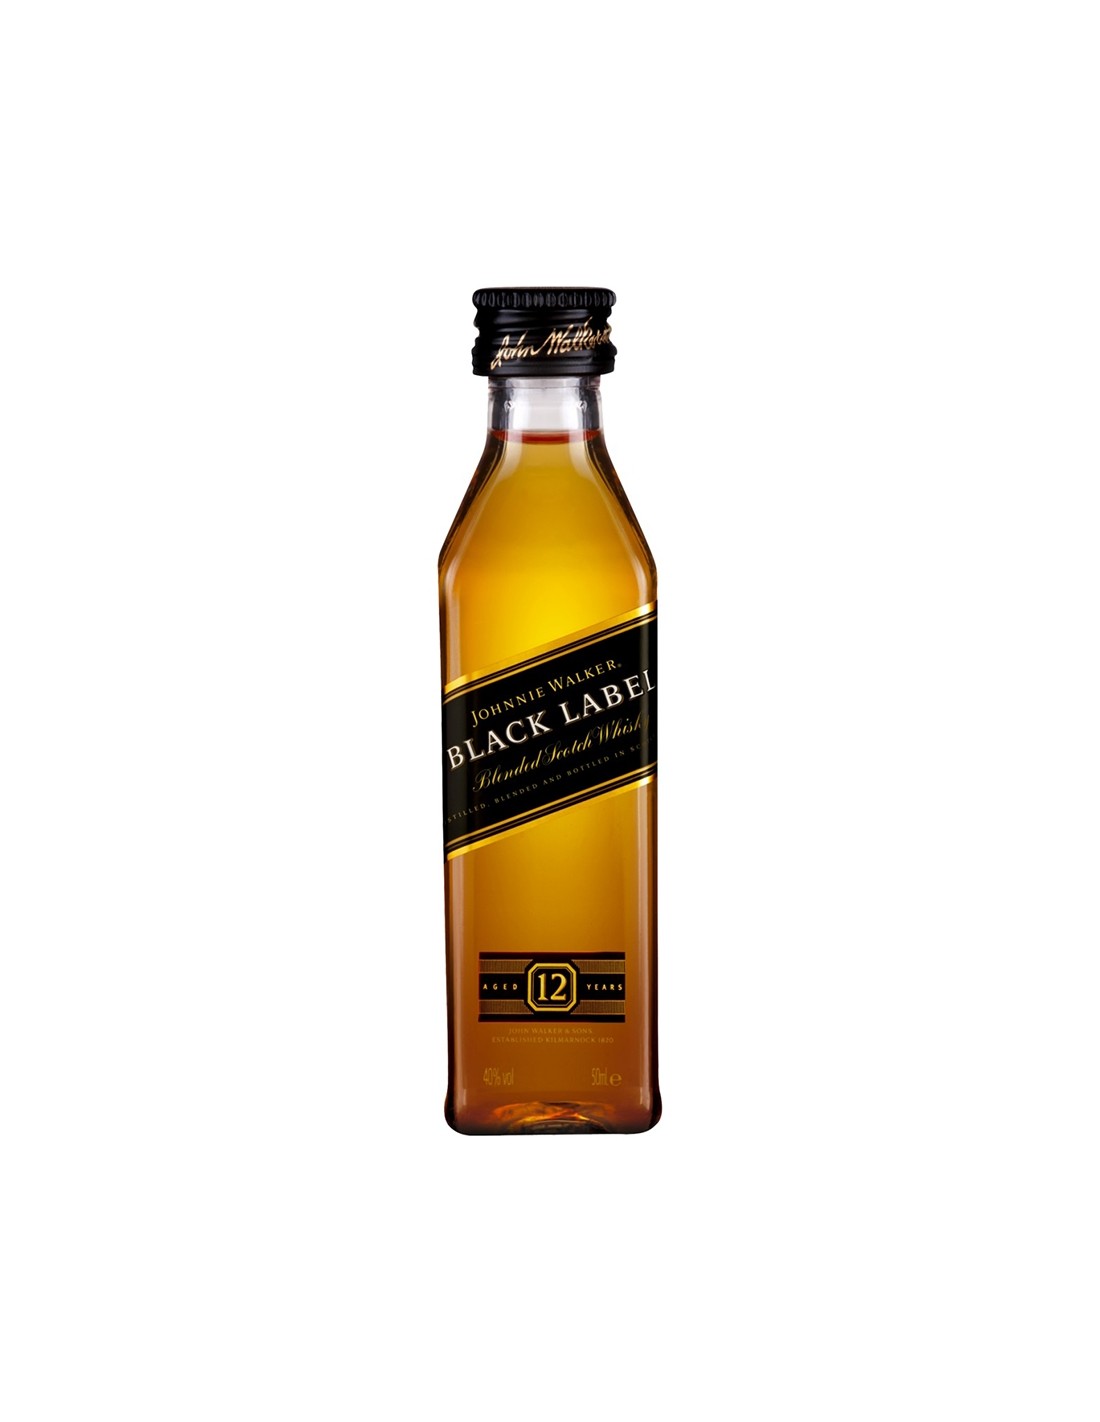 Whisky Johnnie Walker Black Label, 0.05L, 12 ani, 40% alc., Scotia alcooldiscount.ro